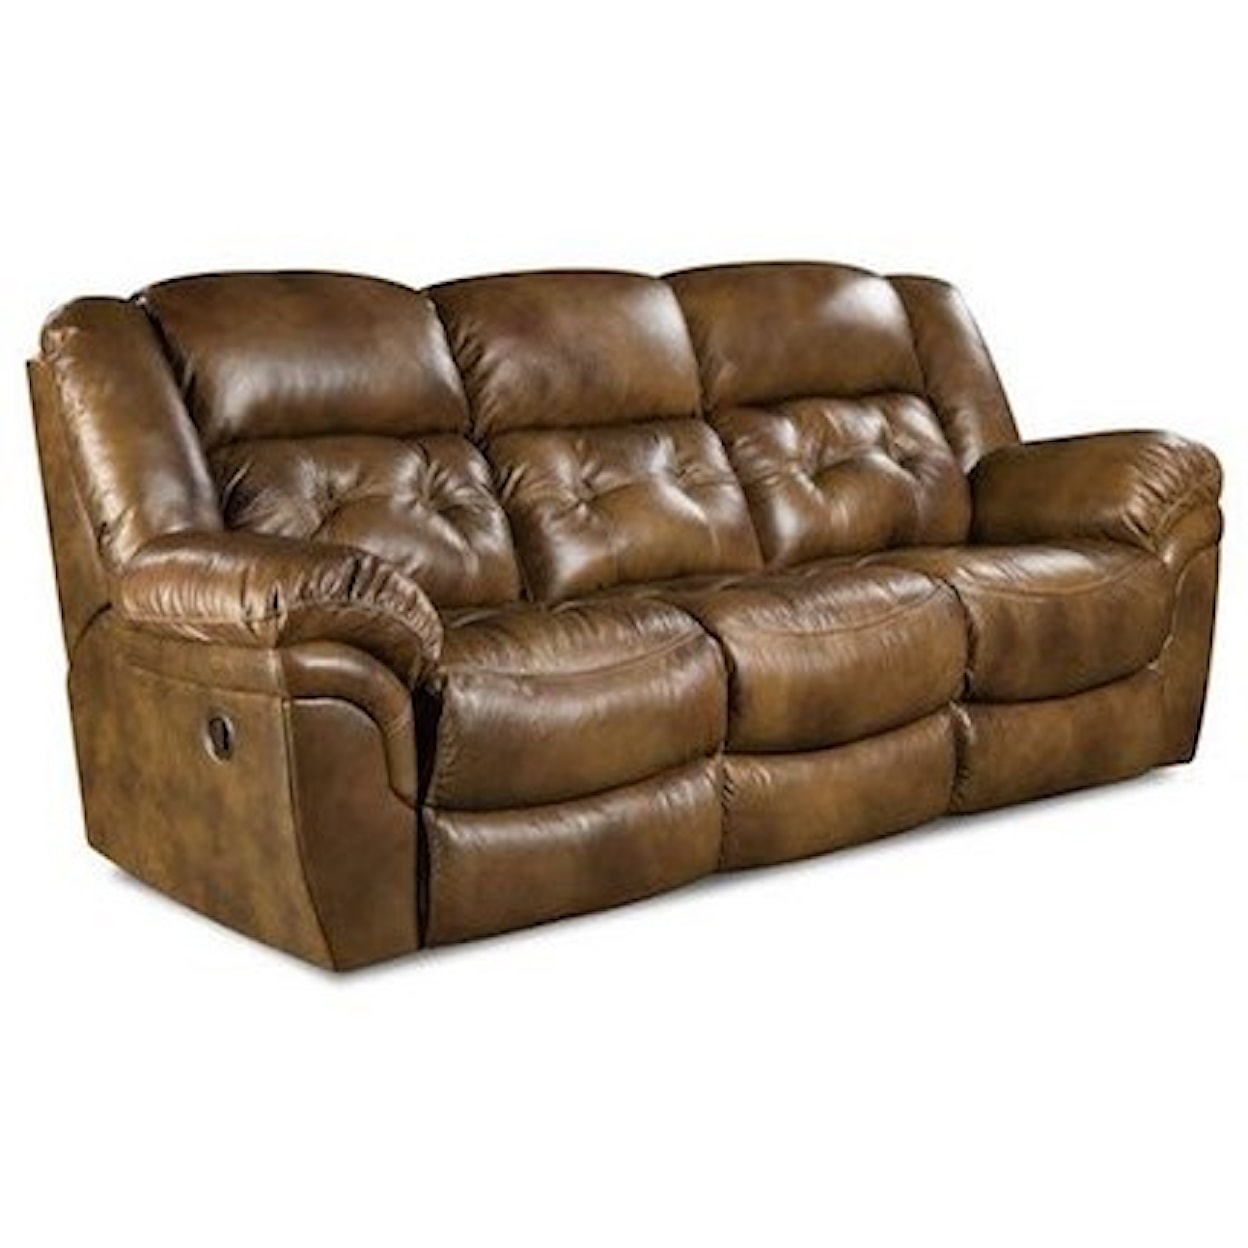 HomeStretch 155 Double Reclining Sofa